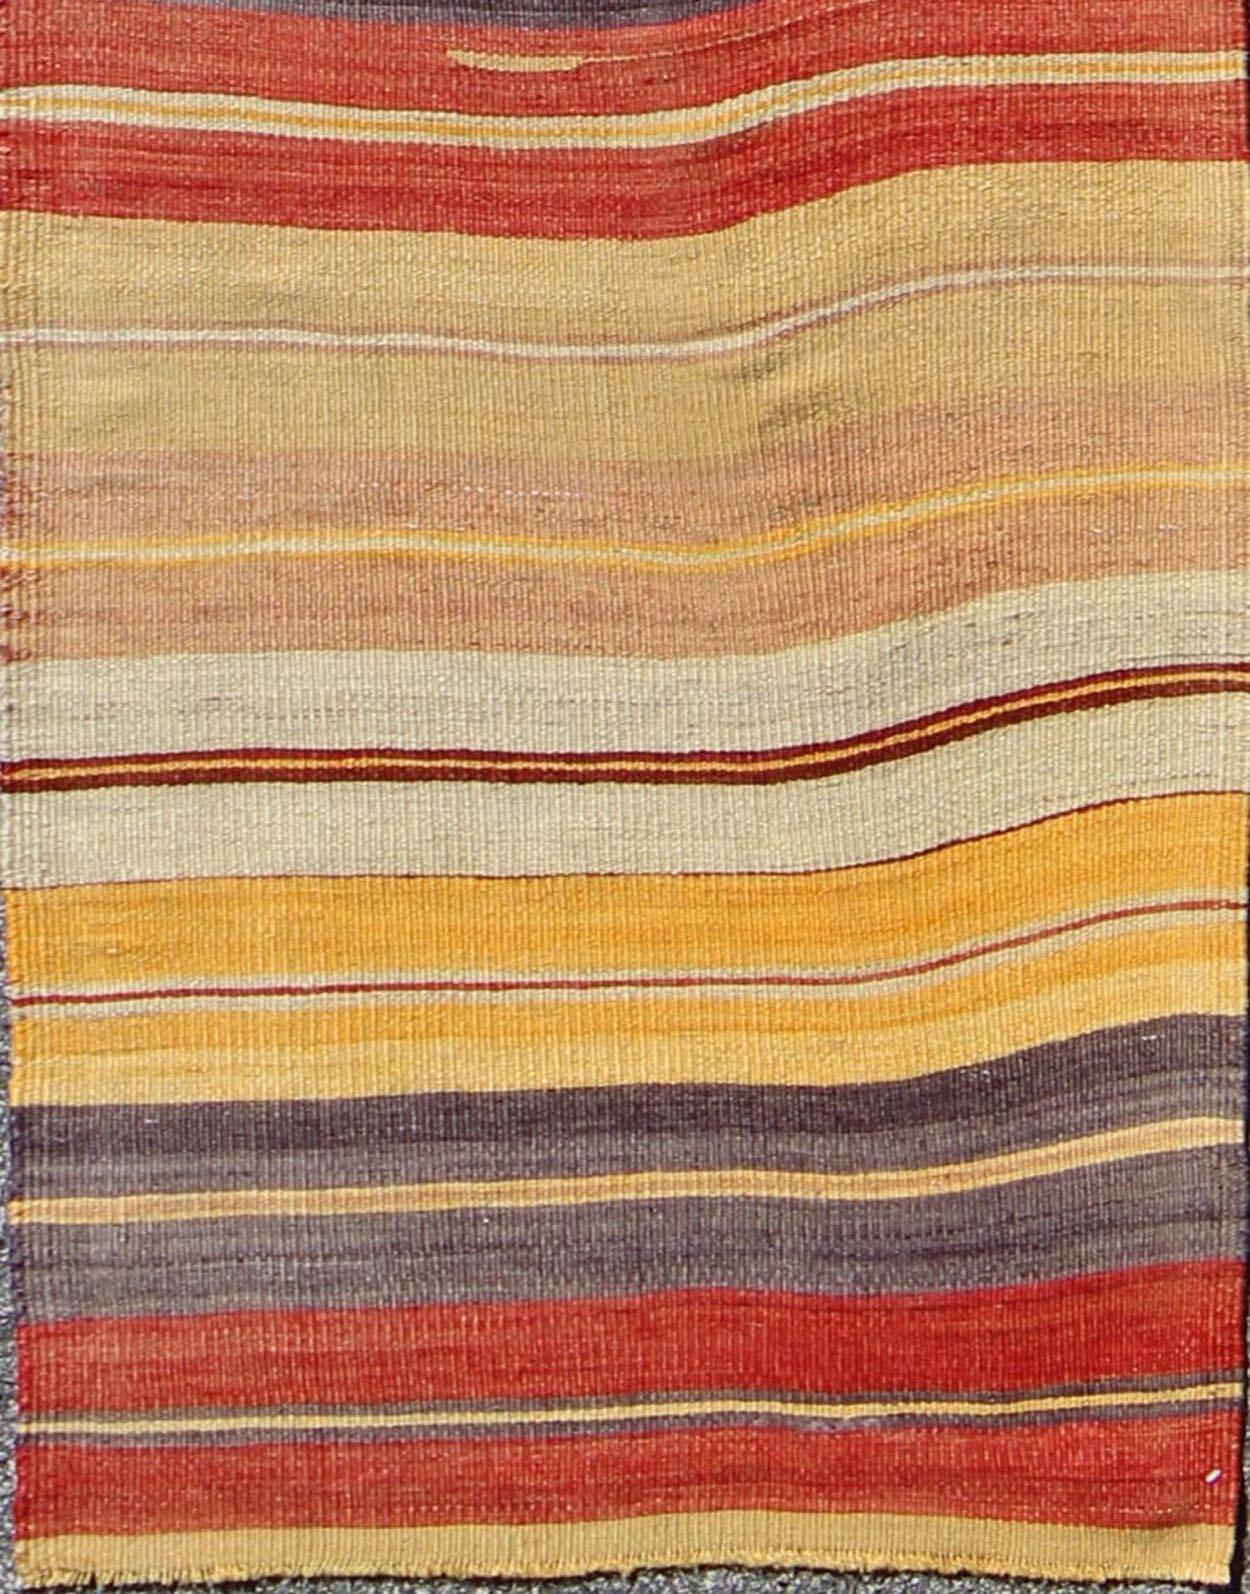 Colorful vintage Turkish Kilim rug with horizontal stripe design, rug en-775, country of origin / type: Turkey / Kilim, circa mid-20th century.

Featuring a repeating horizontal stripe design, this unique midcentury kilim showcases an array of